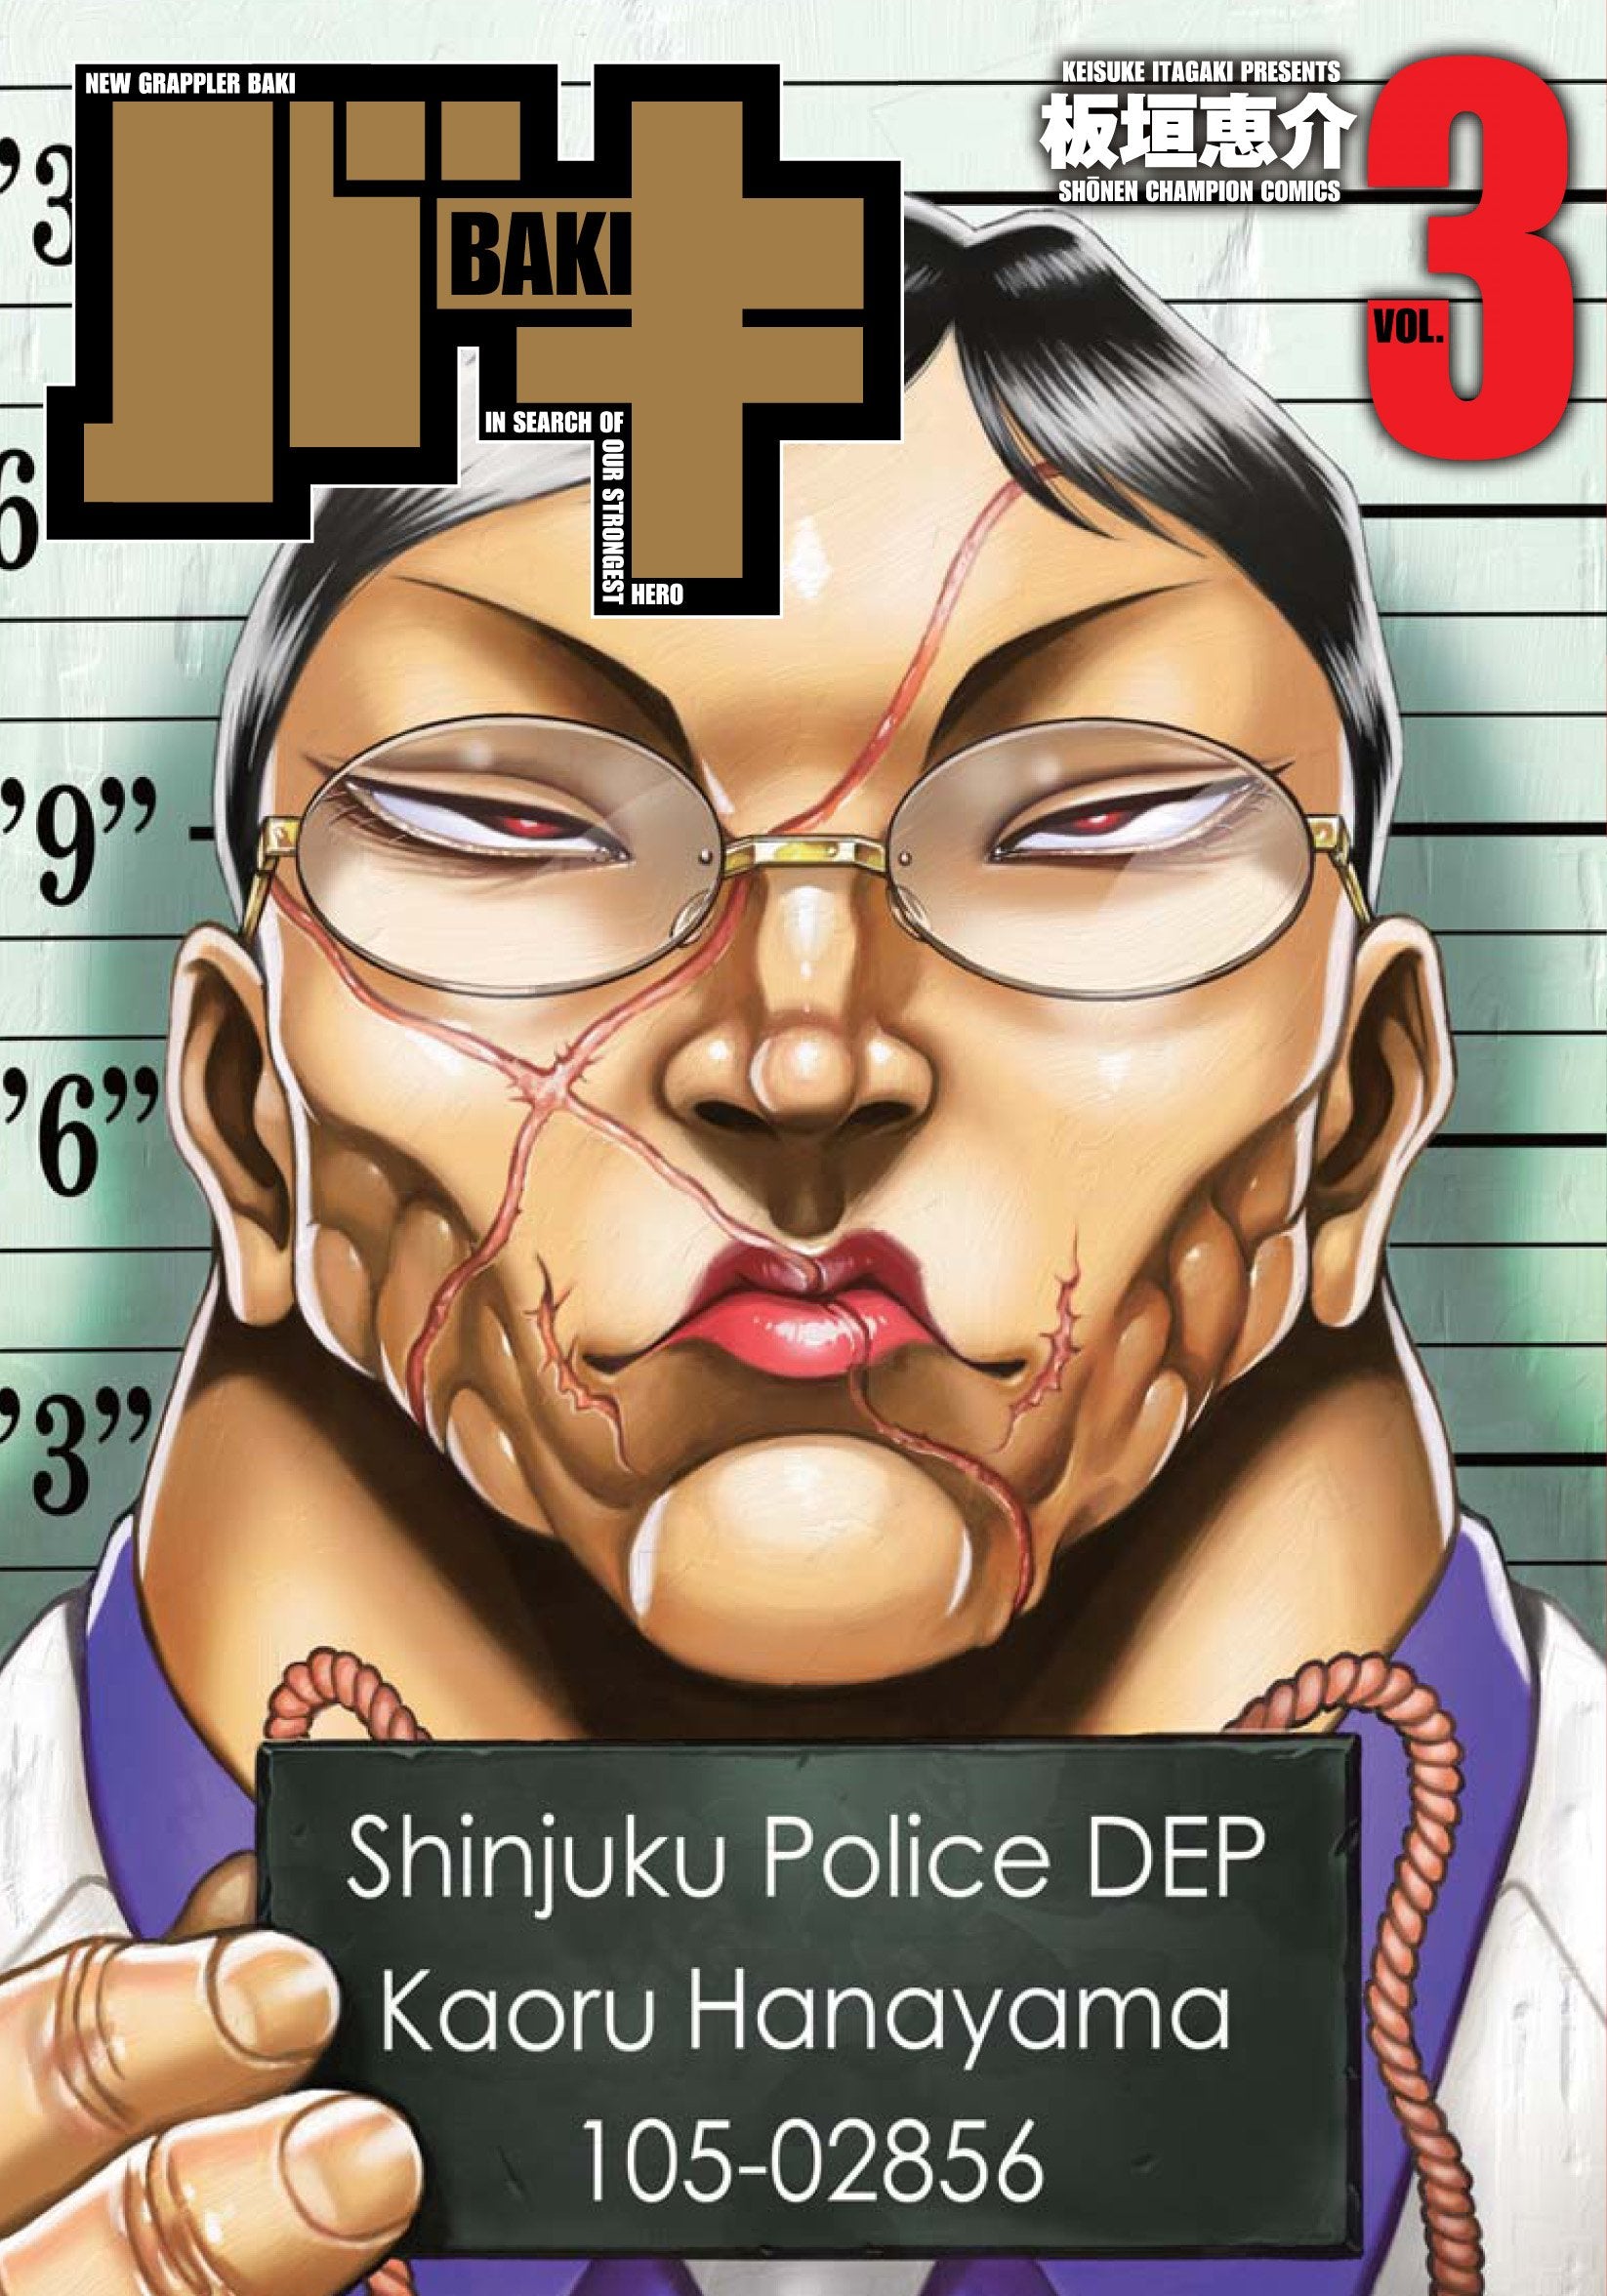 New Baki The Grappler Manga Begins This Summer